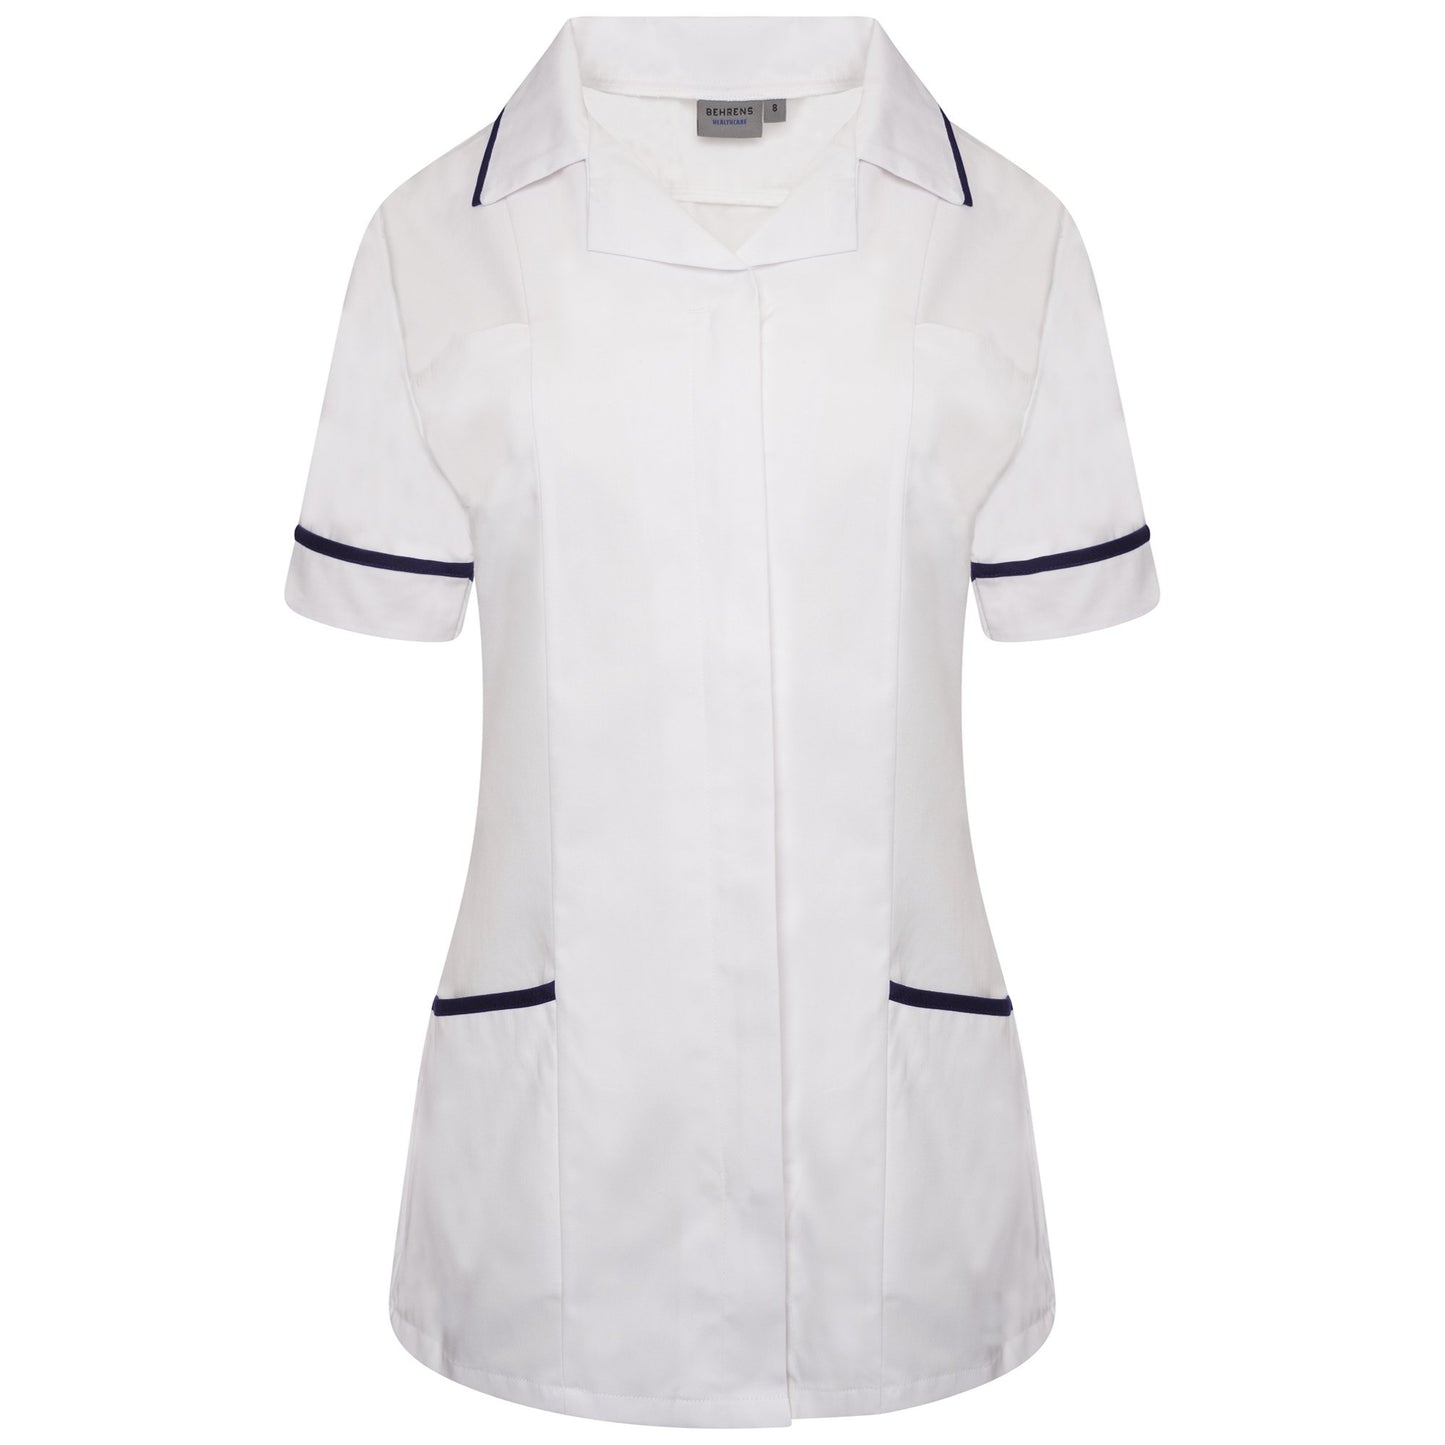 Behrens Ladies Revere Nurses Tunic - NCLTPSR - White/Navy Trim - UK 8